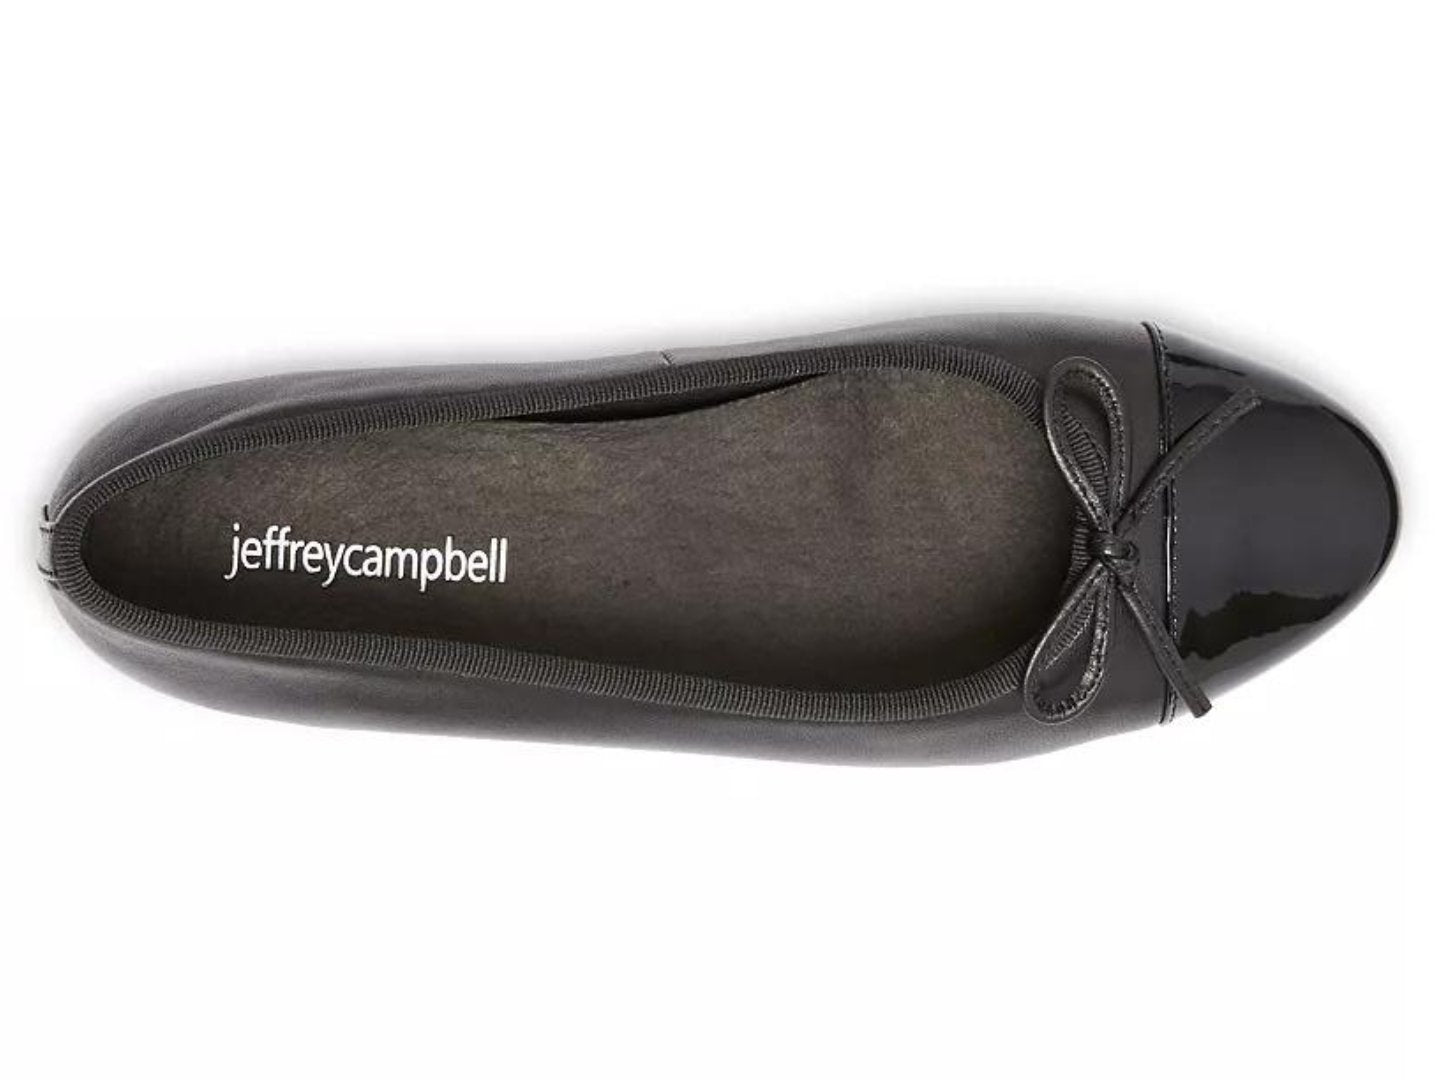 JC Play Studded Platform Sneakers Shoes: Size 8 UK, Color Tan | eBay